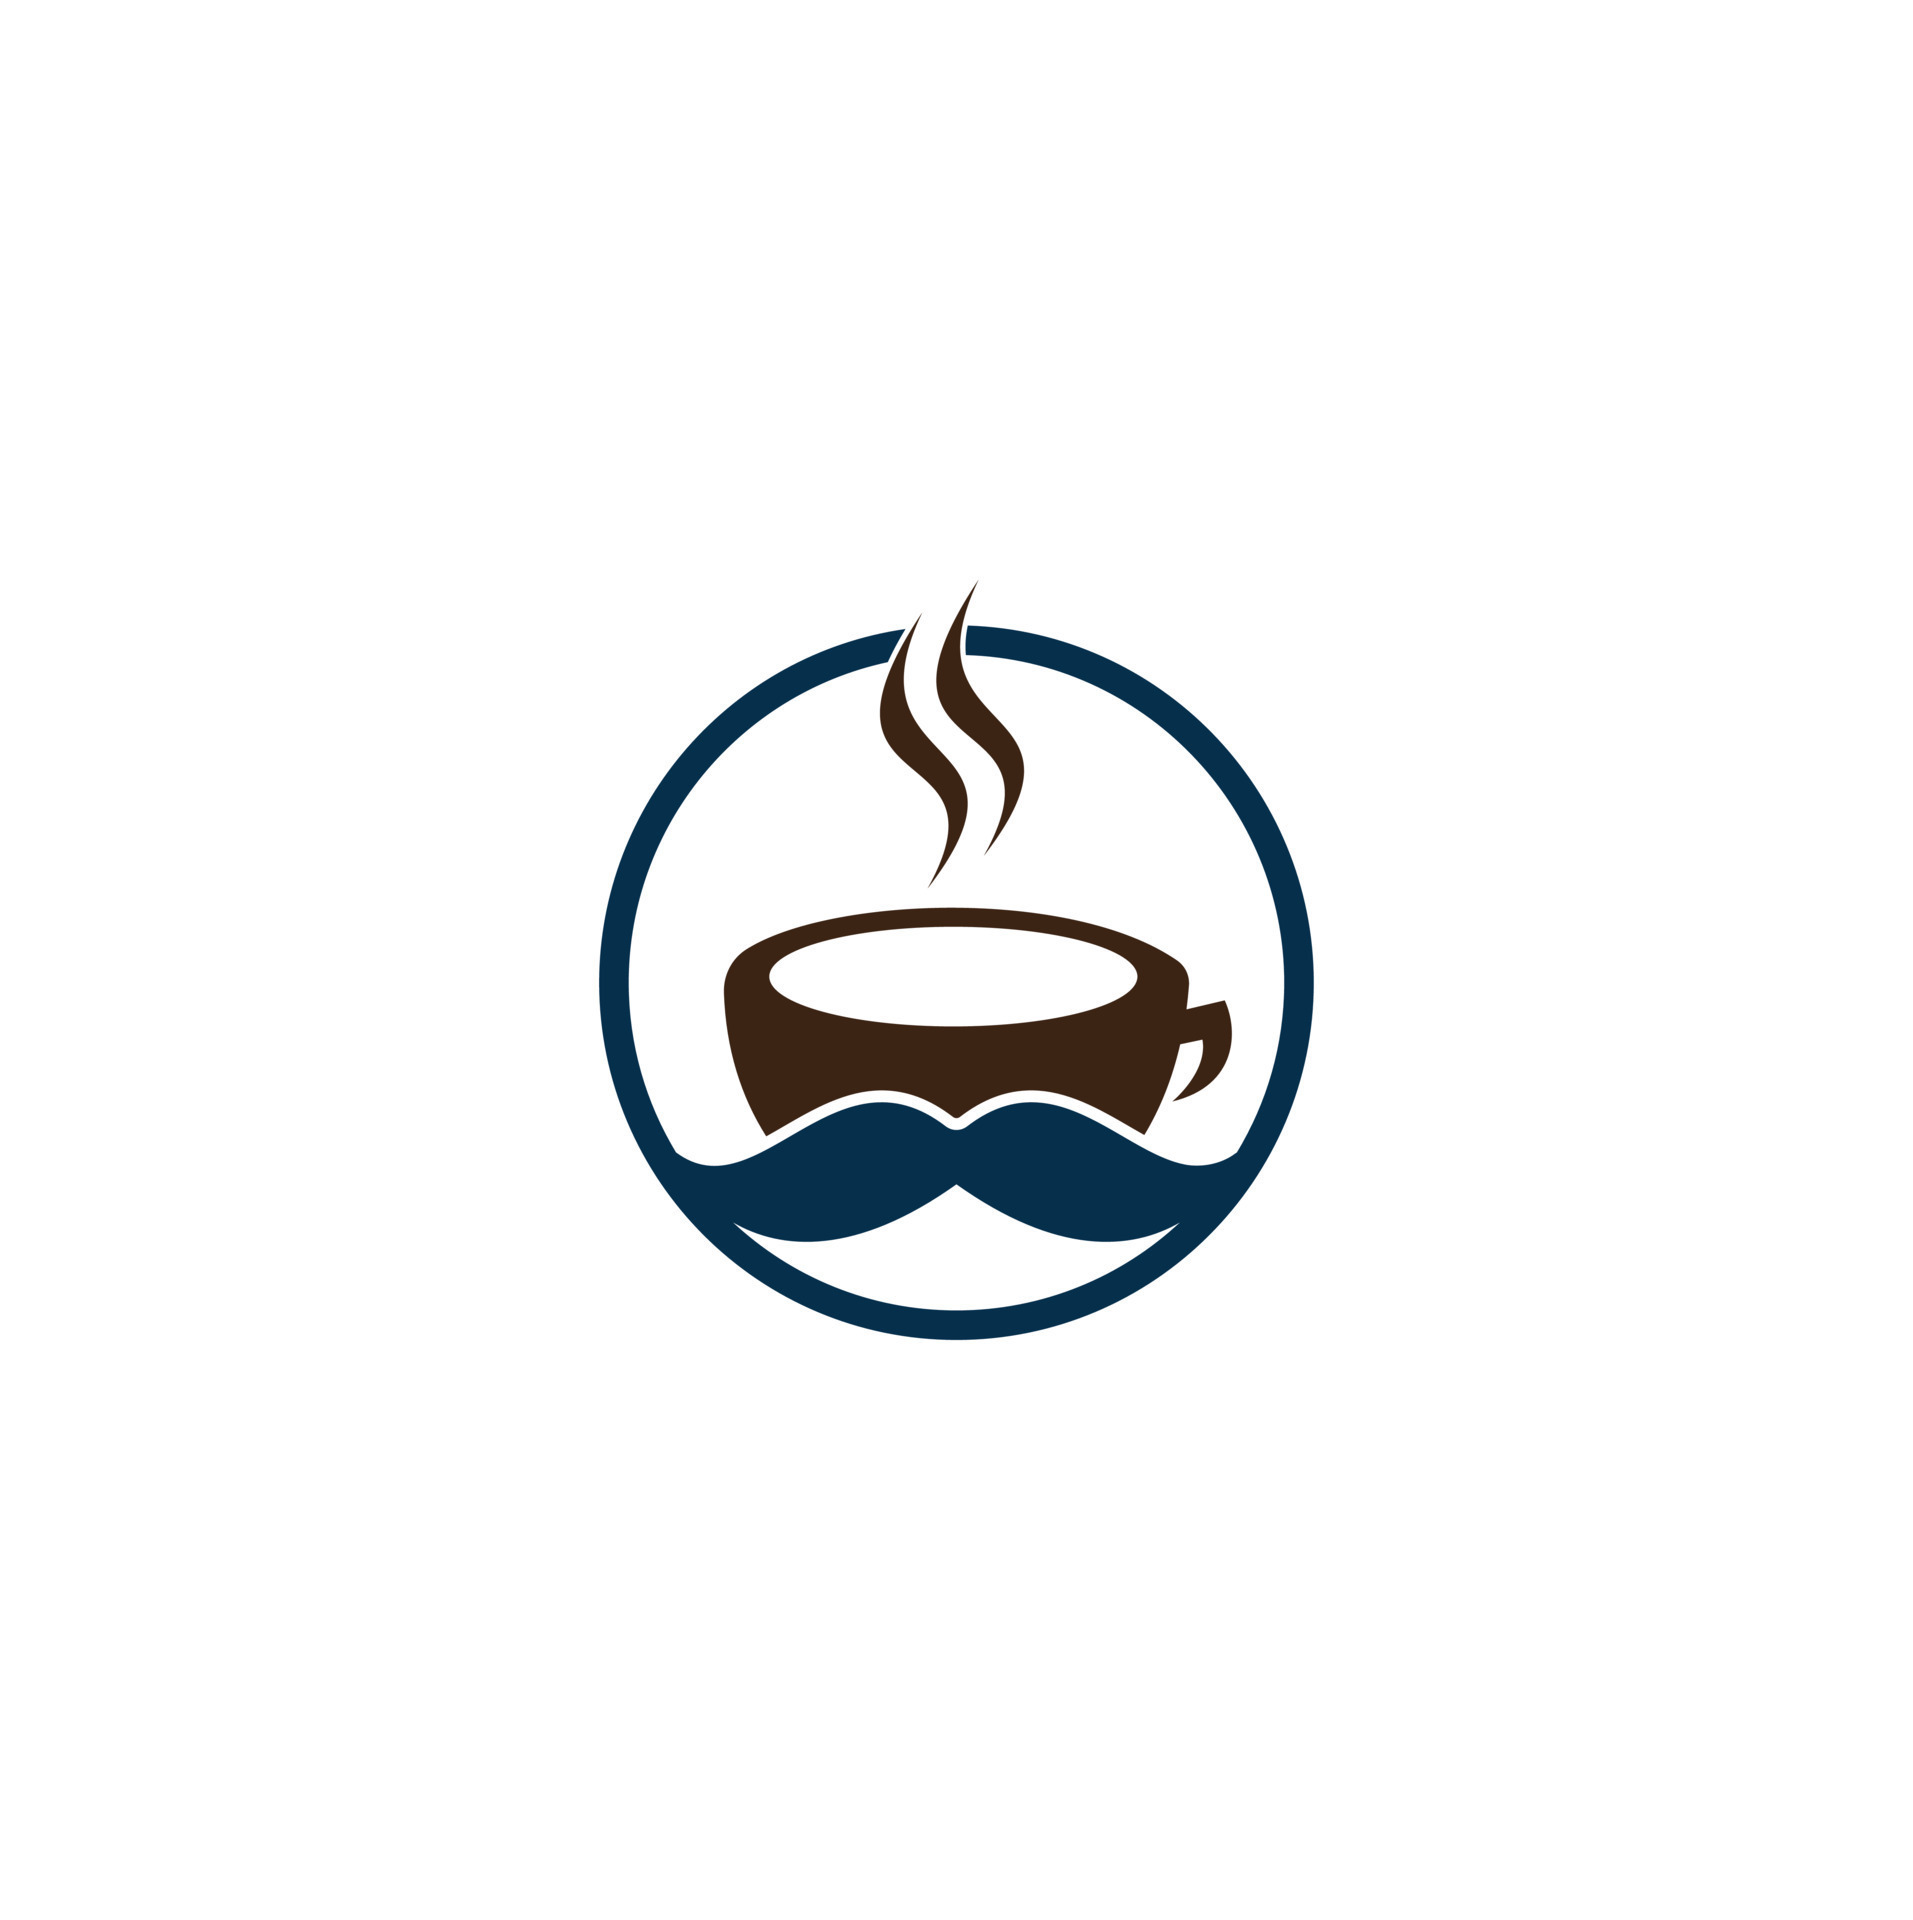 https://static.vecteezy.com/system/resources/previews/013/635/491/original/coffee-shop-logo-illustration-coffee-shop-logo-emblem-mr-coffee-shop-logo-coffee-cafe-logo-vector.jpg